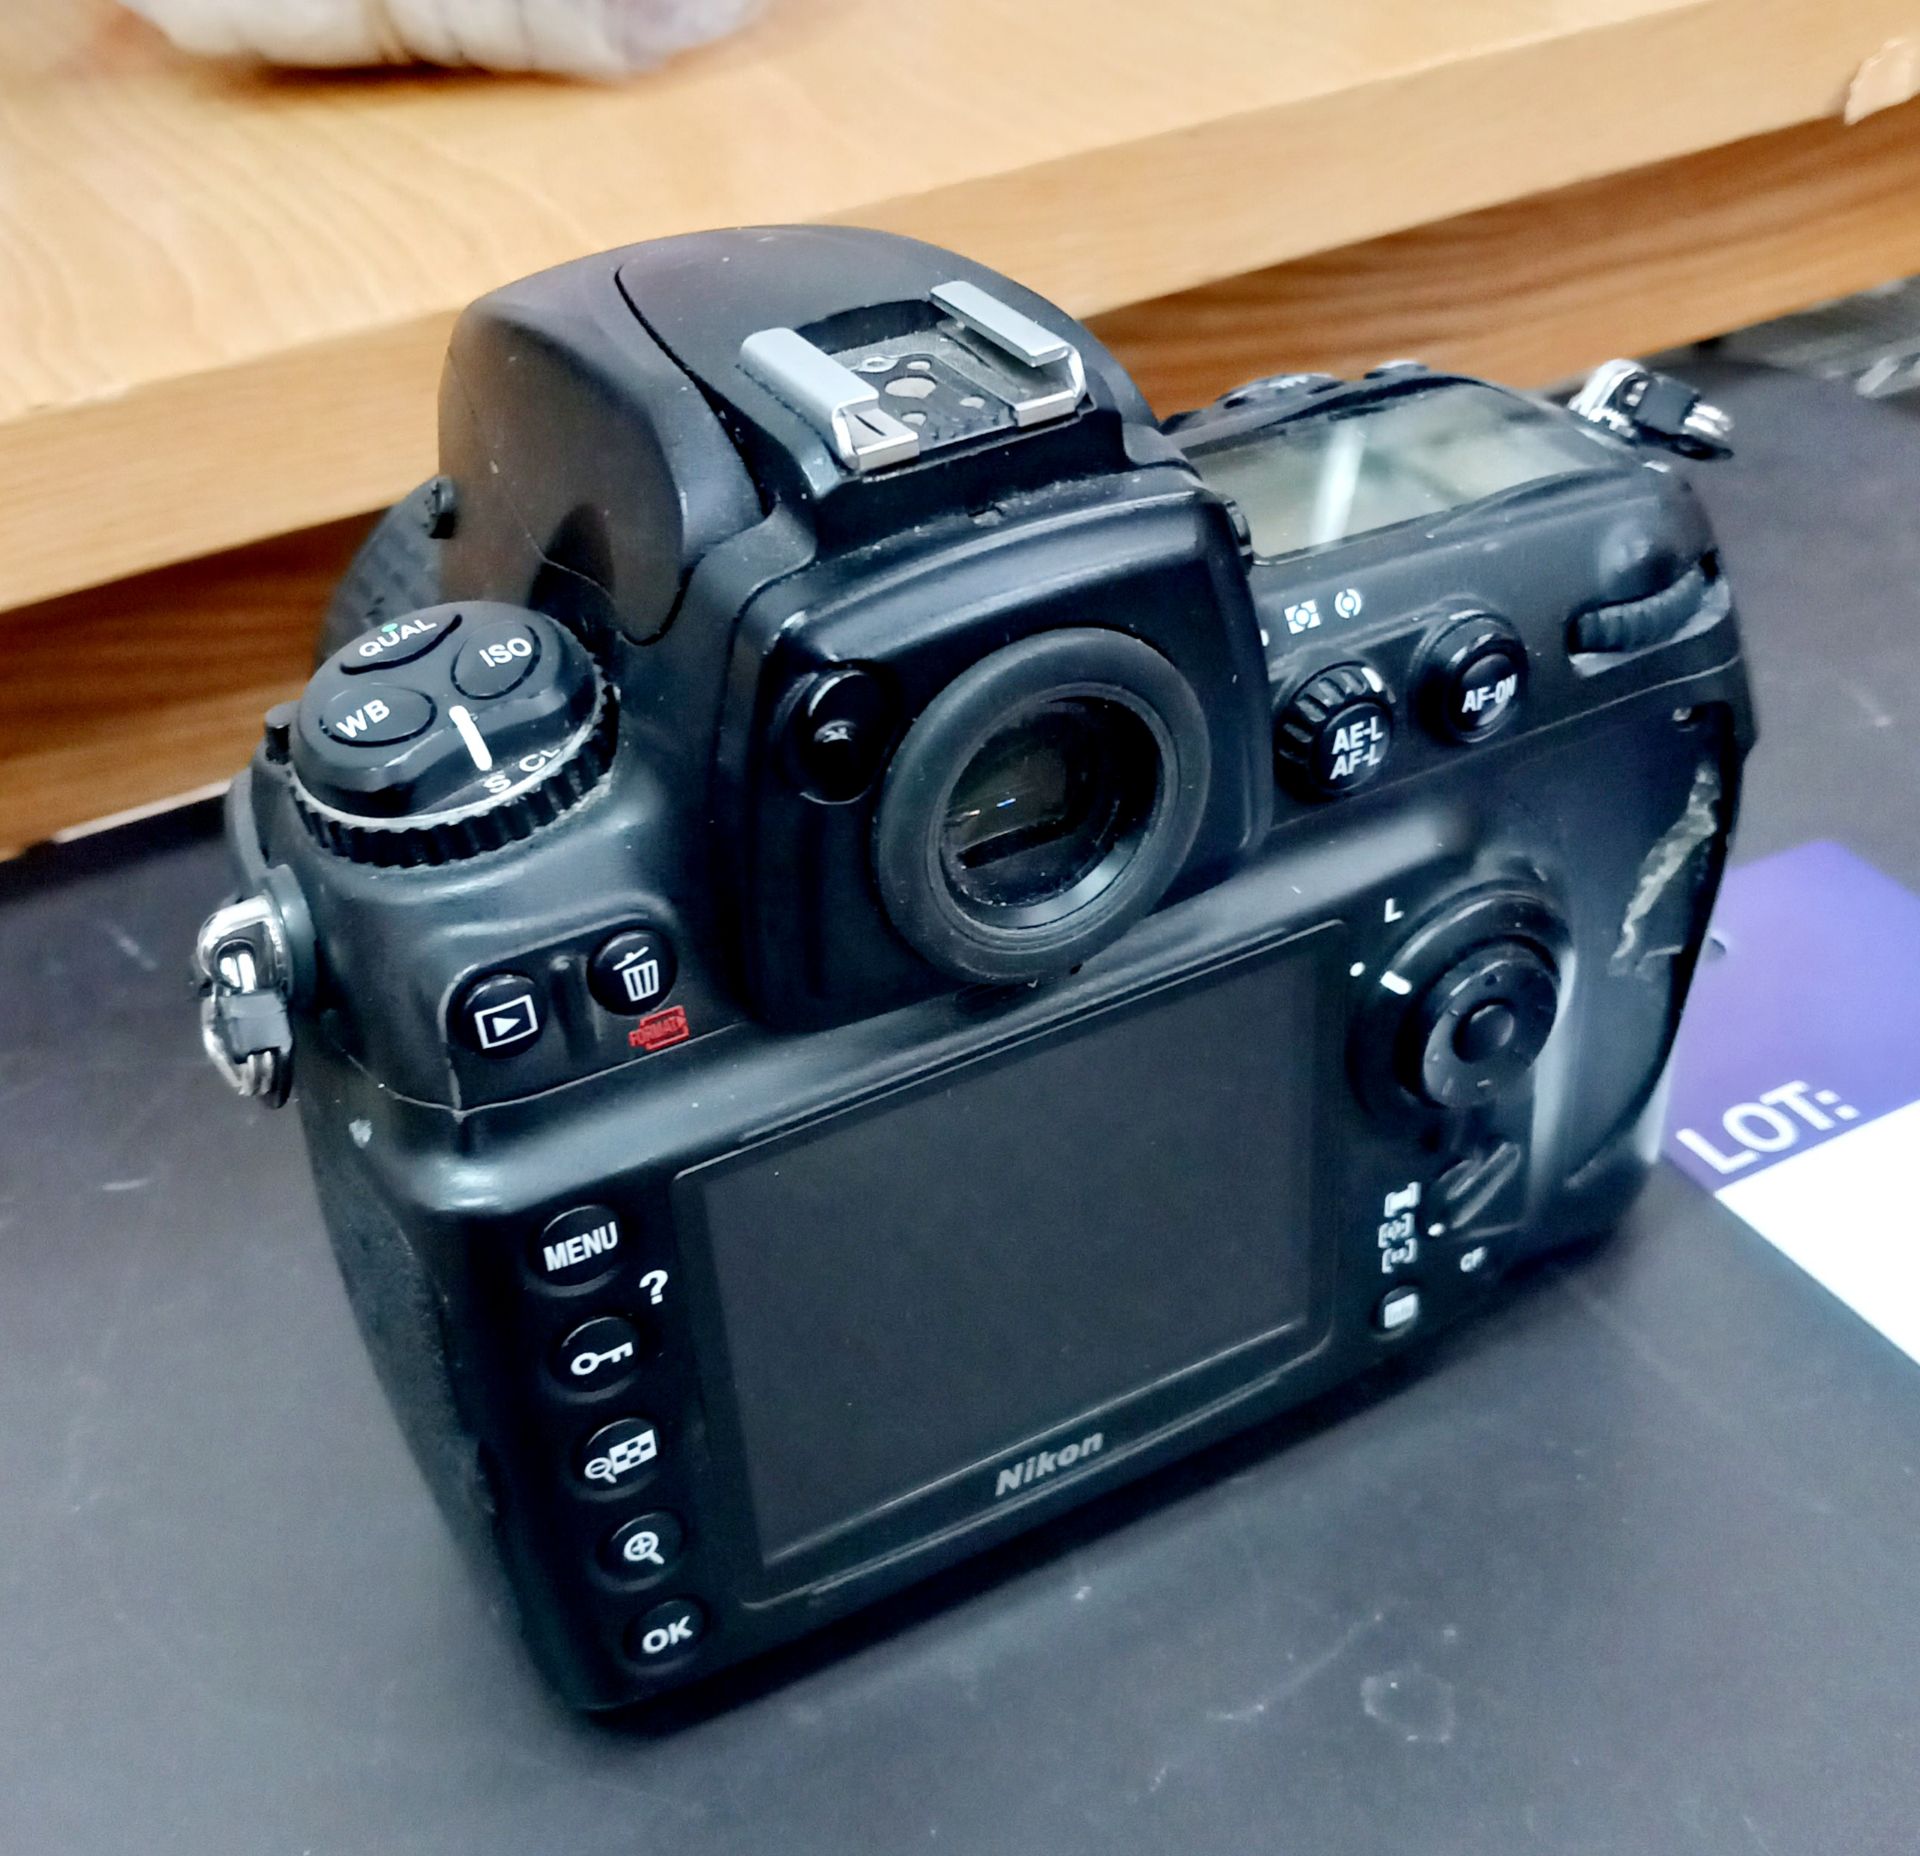 Nikon D700 - Image 3 of 3